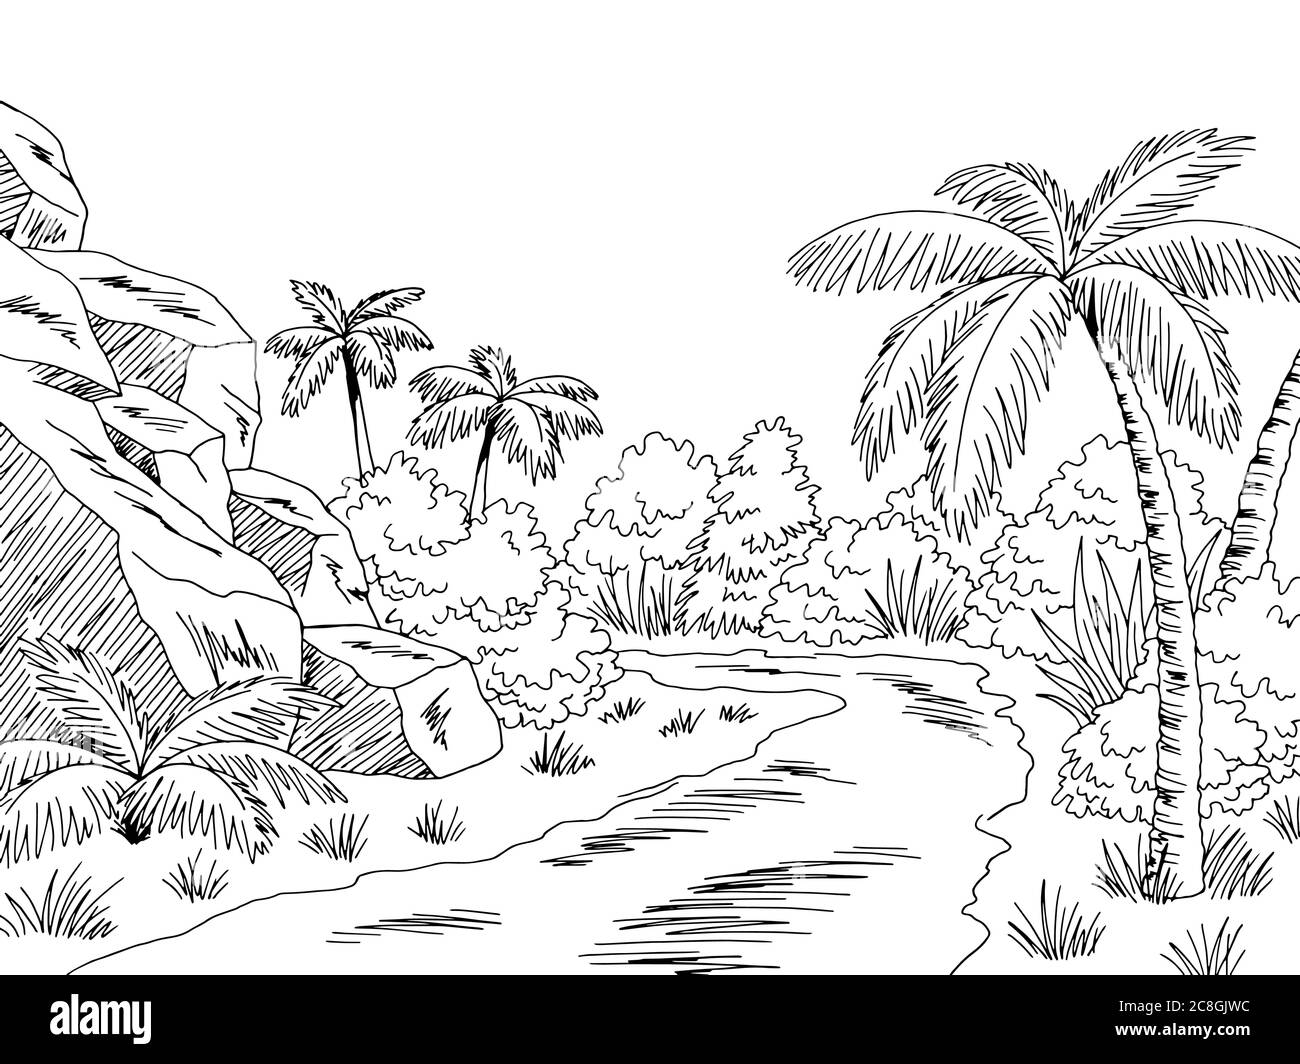 Dschungel Straße Grafik schwarz weiß Landschaft Skizze Illustration Vektor Stock Vektor